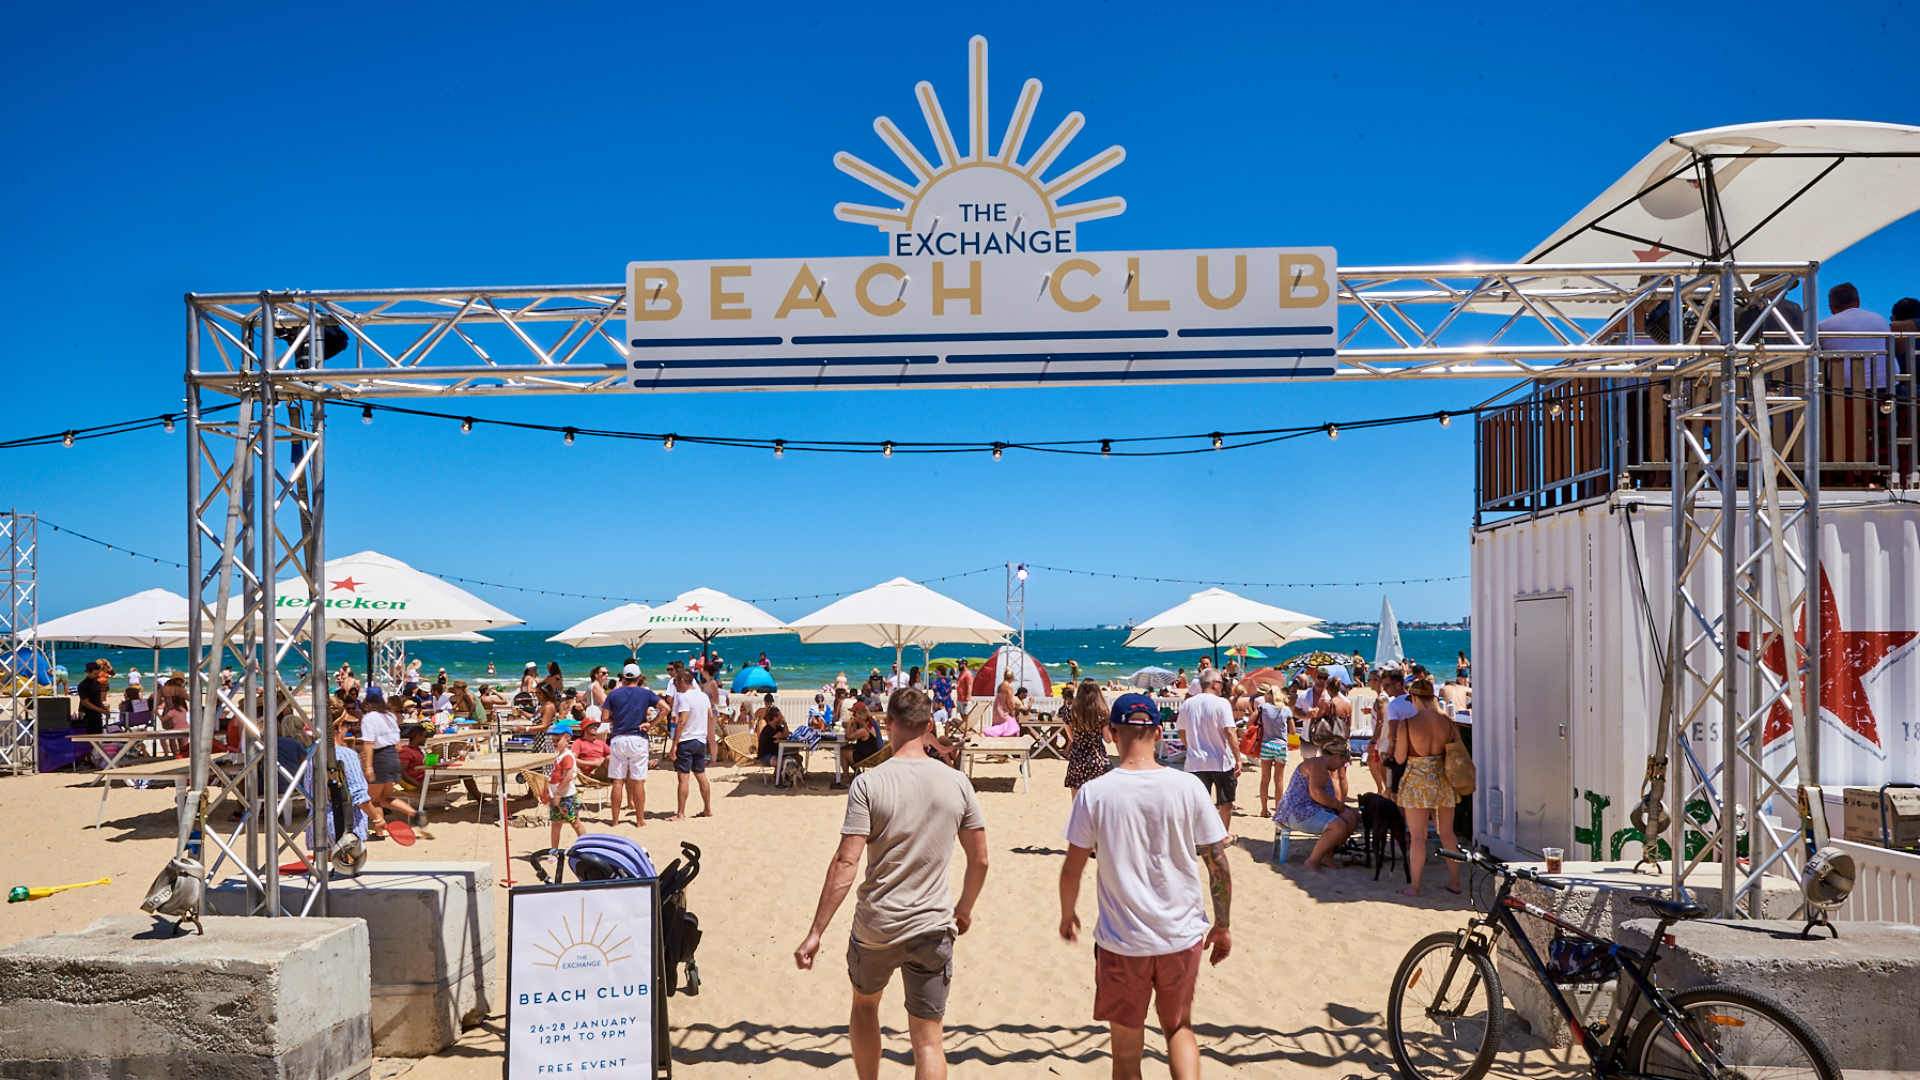 The Exchange Beach Club